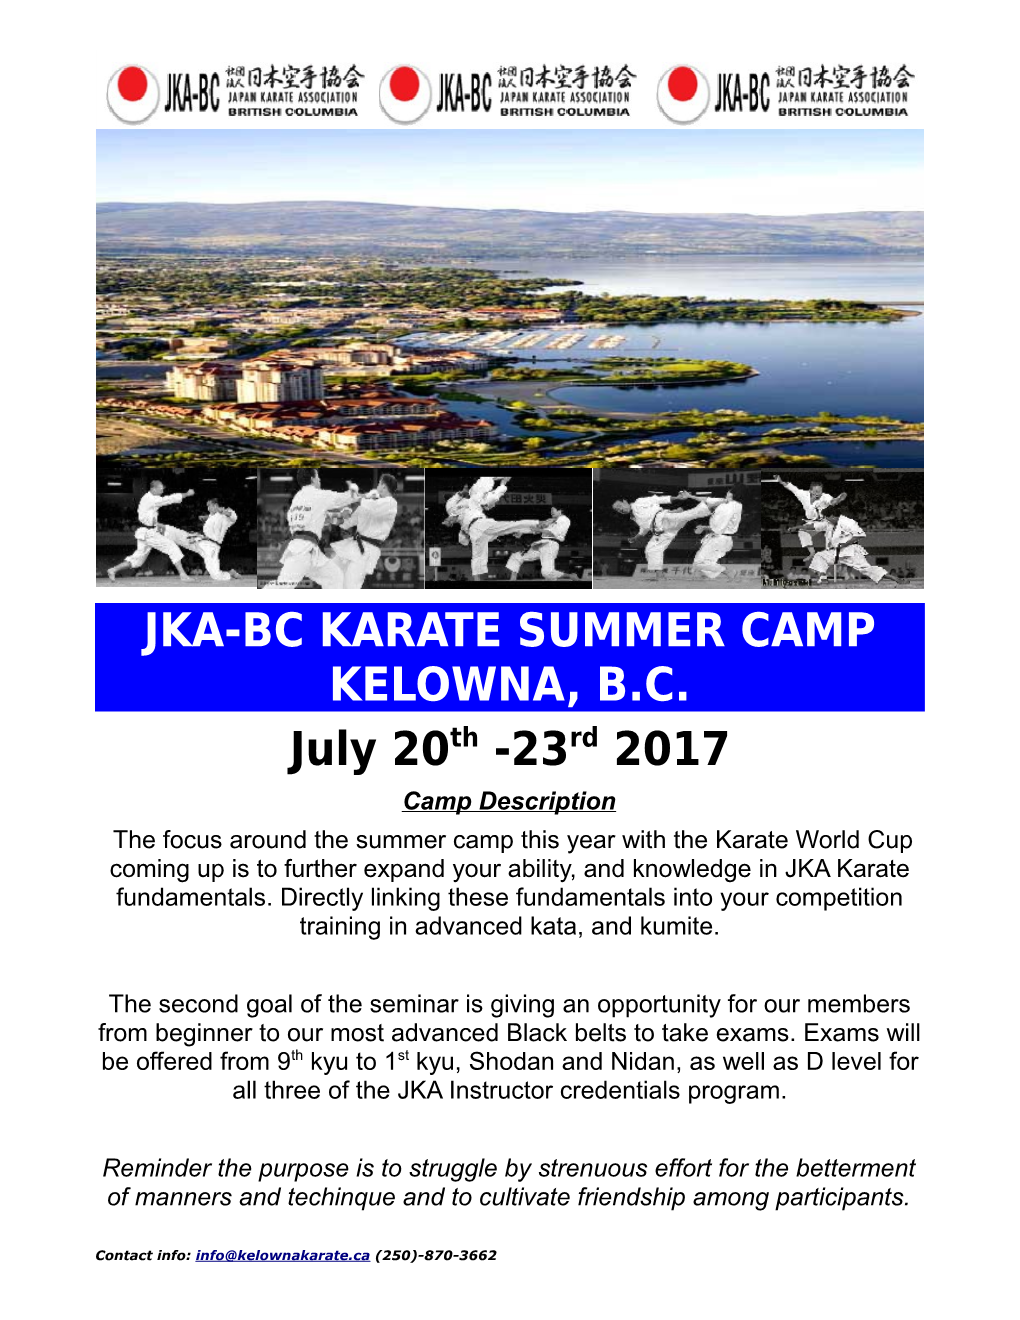 Jka-Bc Karate Summer Camp Kelowna, B.C